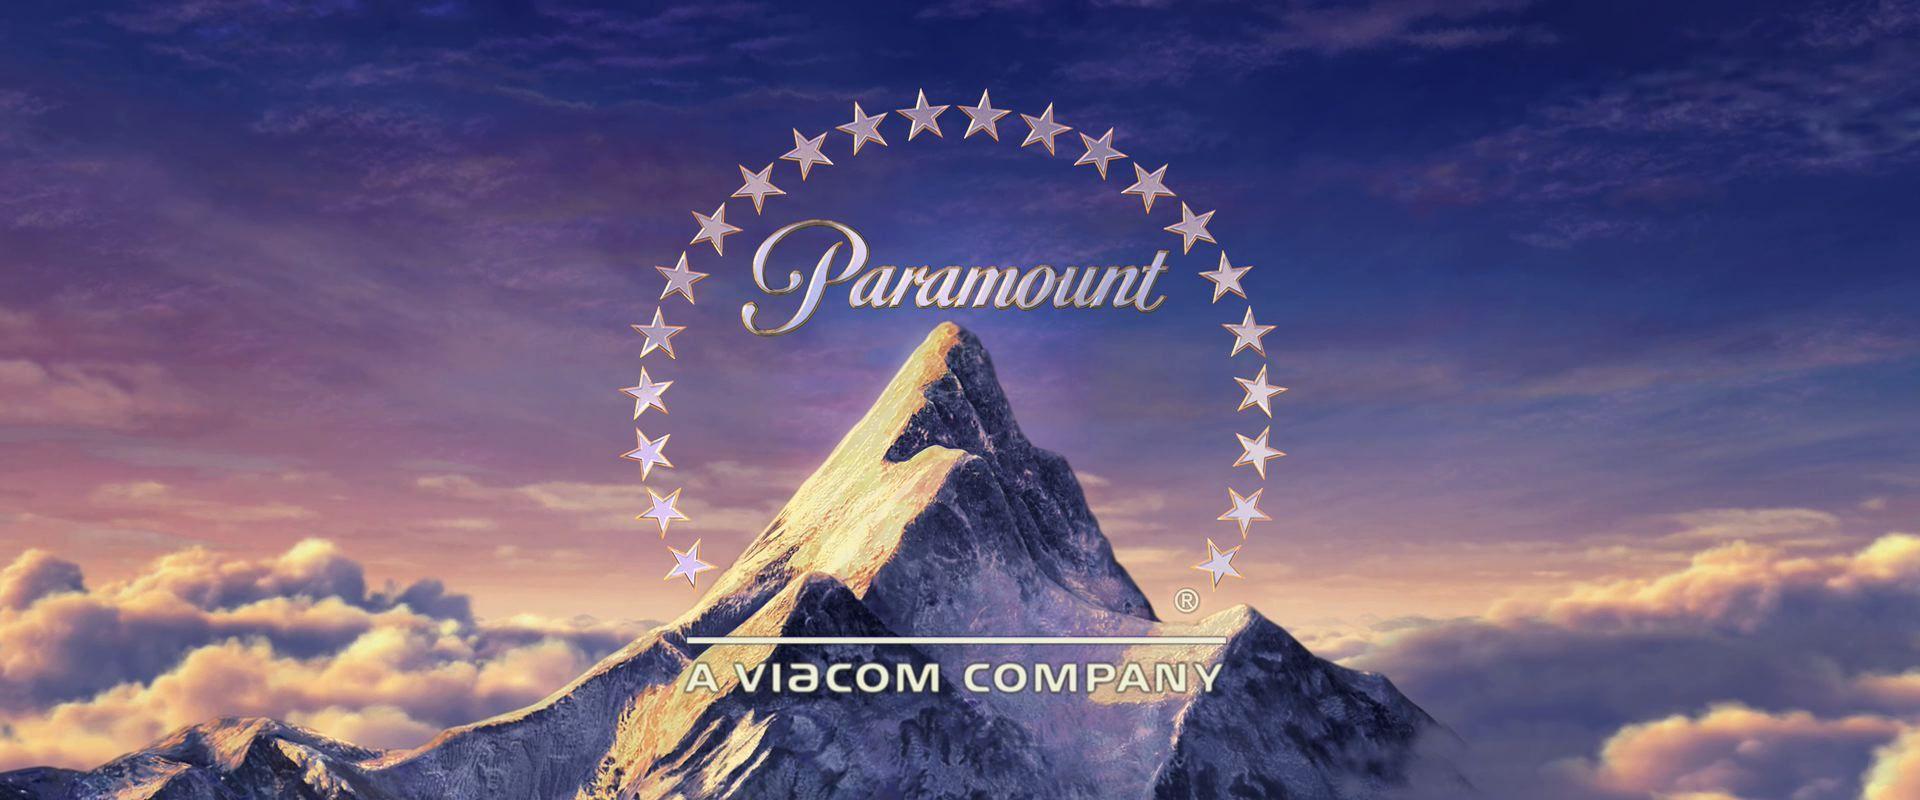 Paramount Studios Wallpaper. Paramount